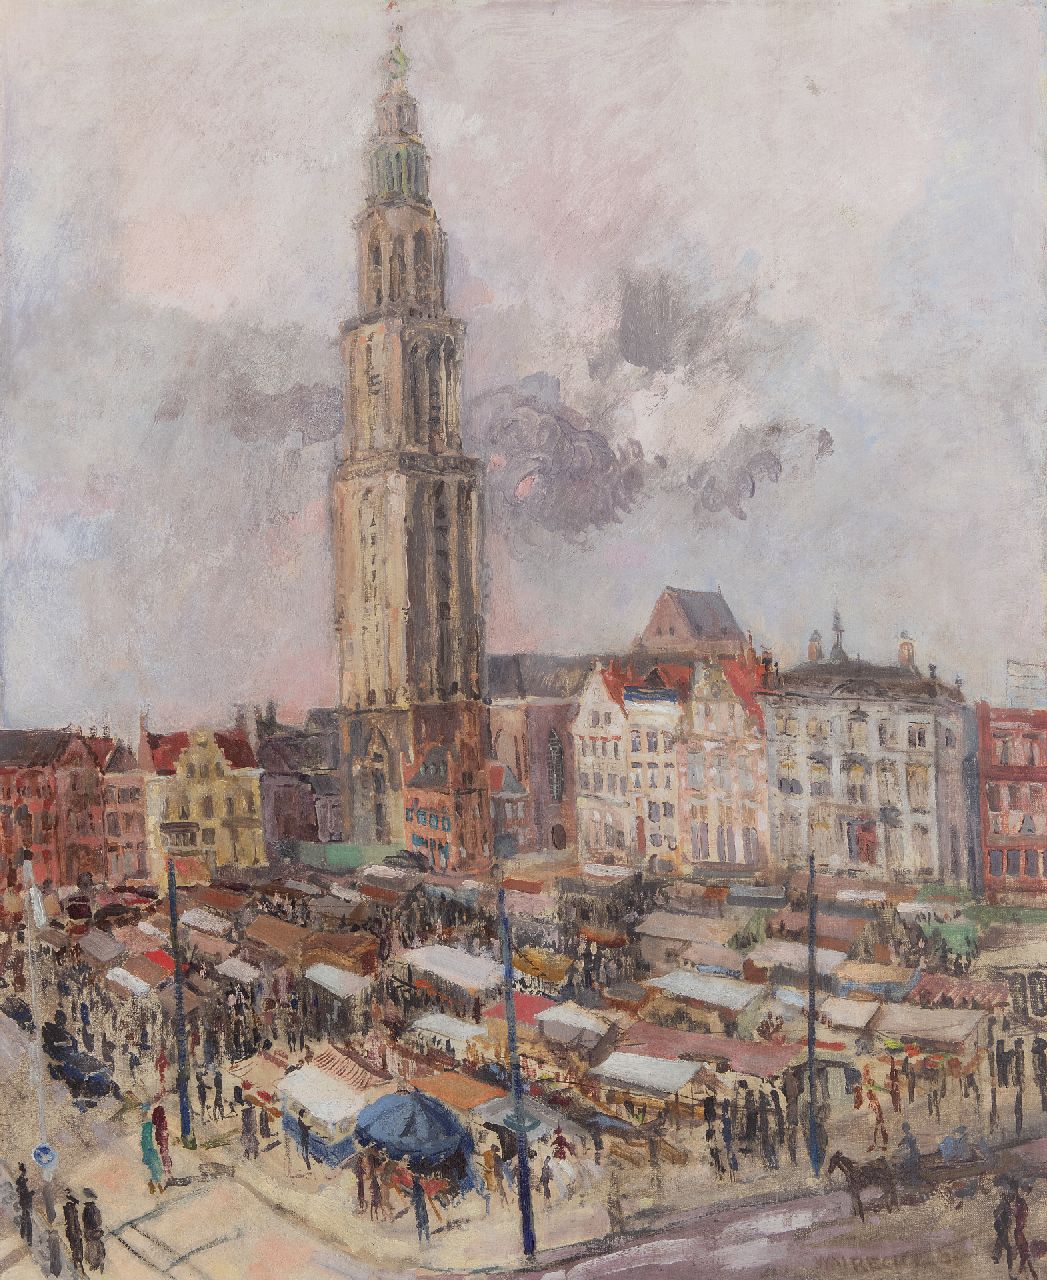 Walrecht B.H.D.  | Bernardus Hermannus David 'Ben' Walrecht, Market Day by the Martinitoren, Groningen, oil on canvas 81.1 x 66.3 cm, signed l.r. and dated '38